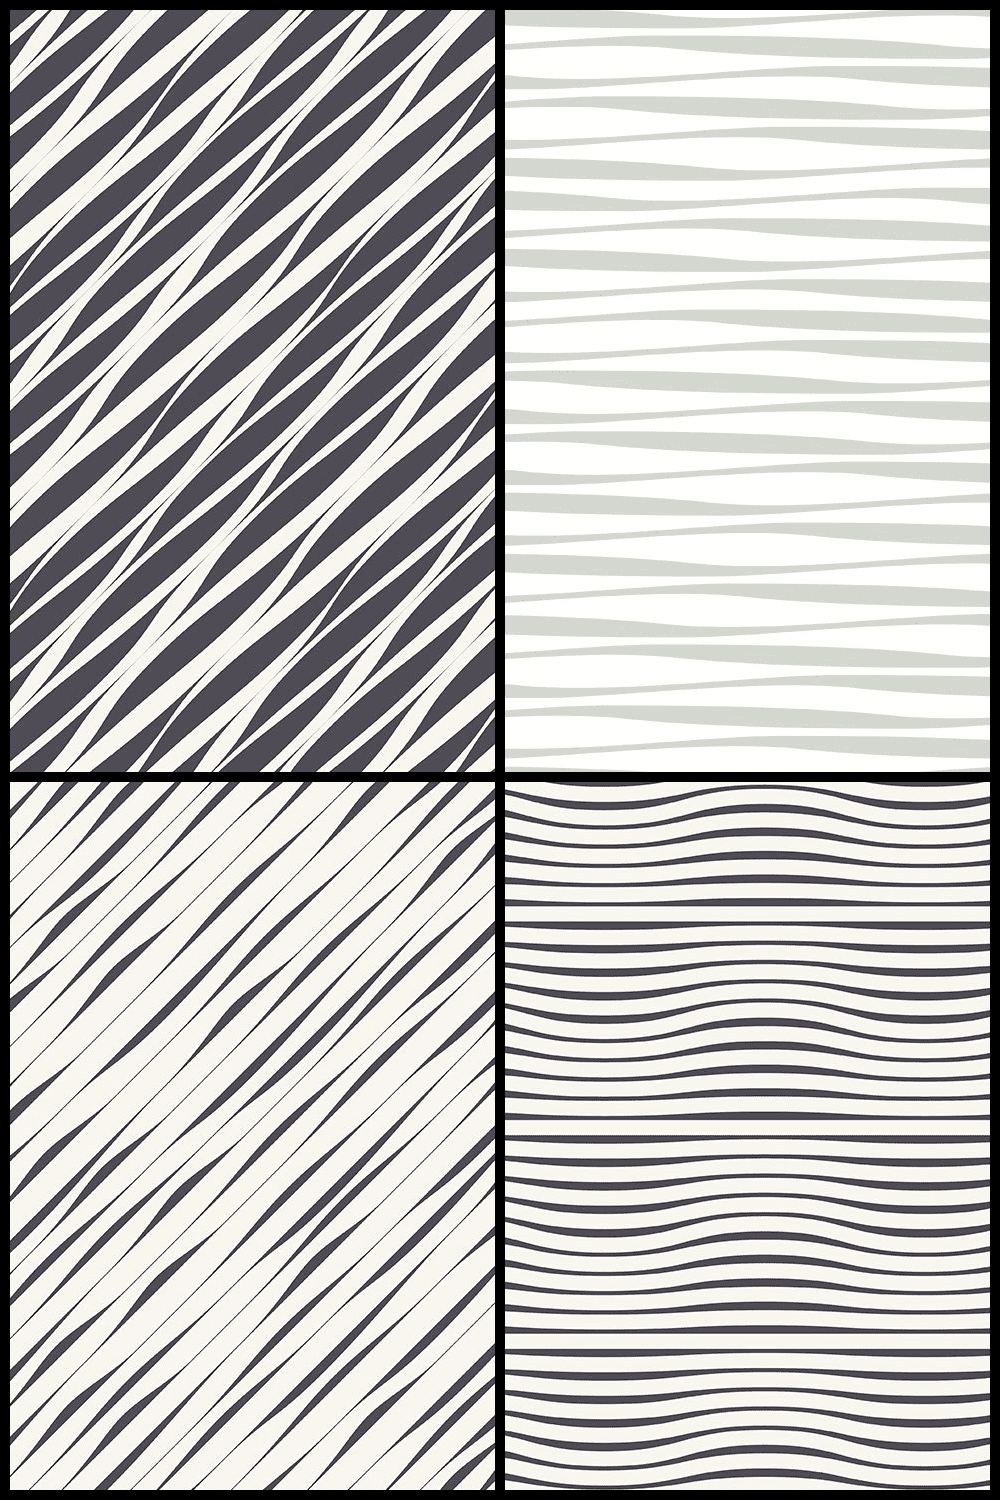 3 striped seamless patterns set 1